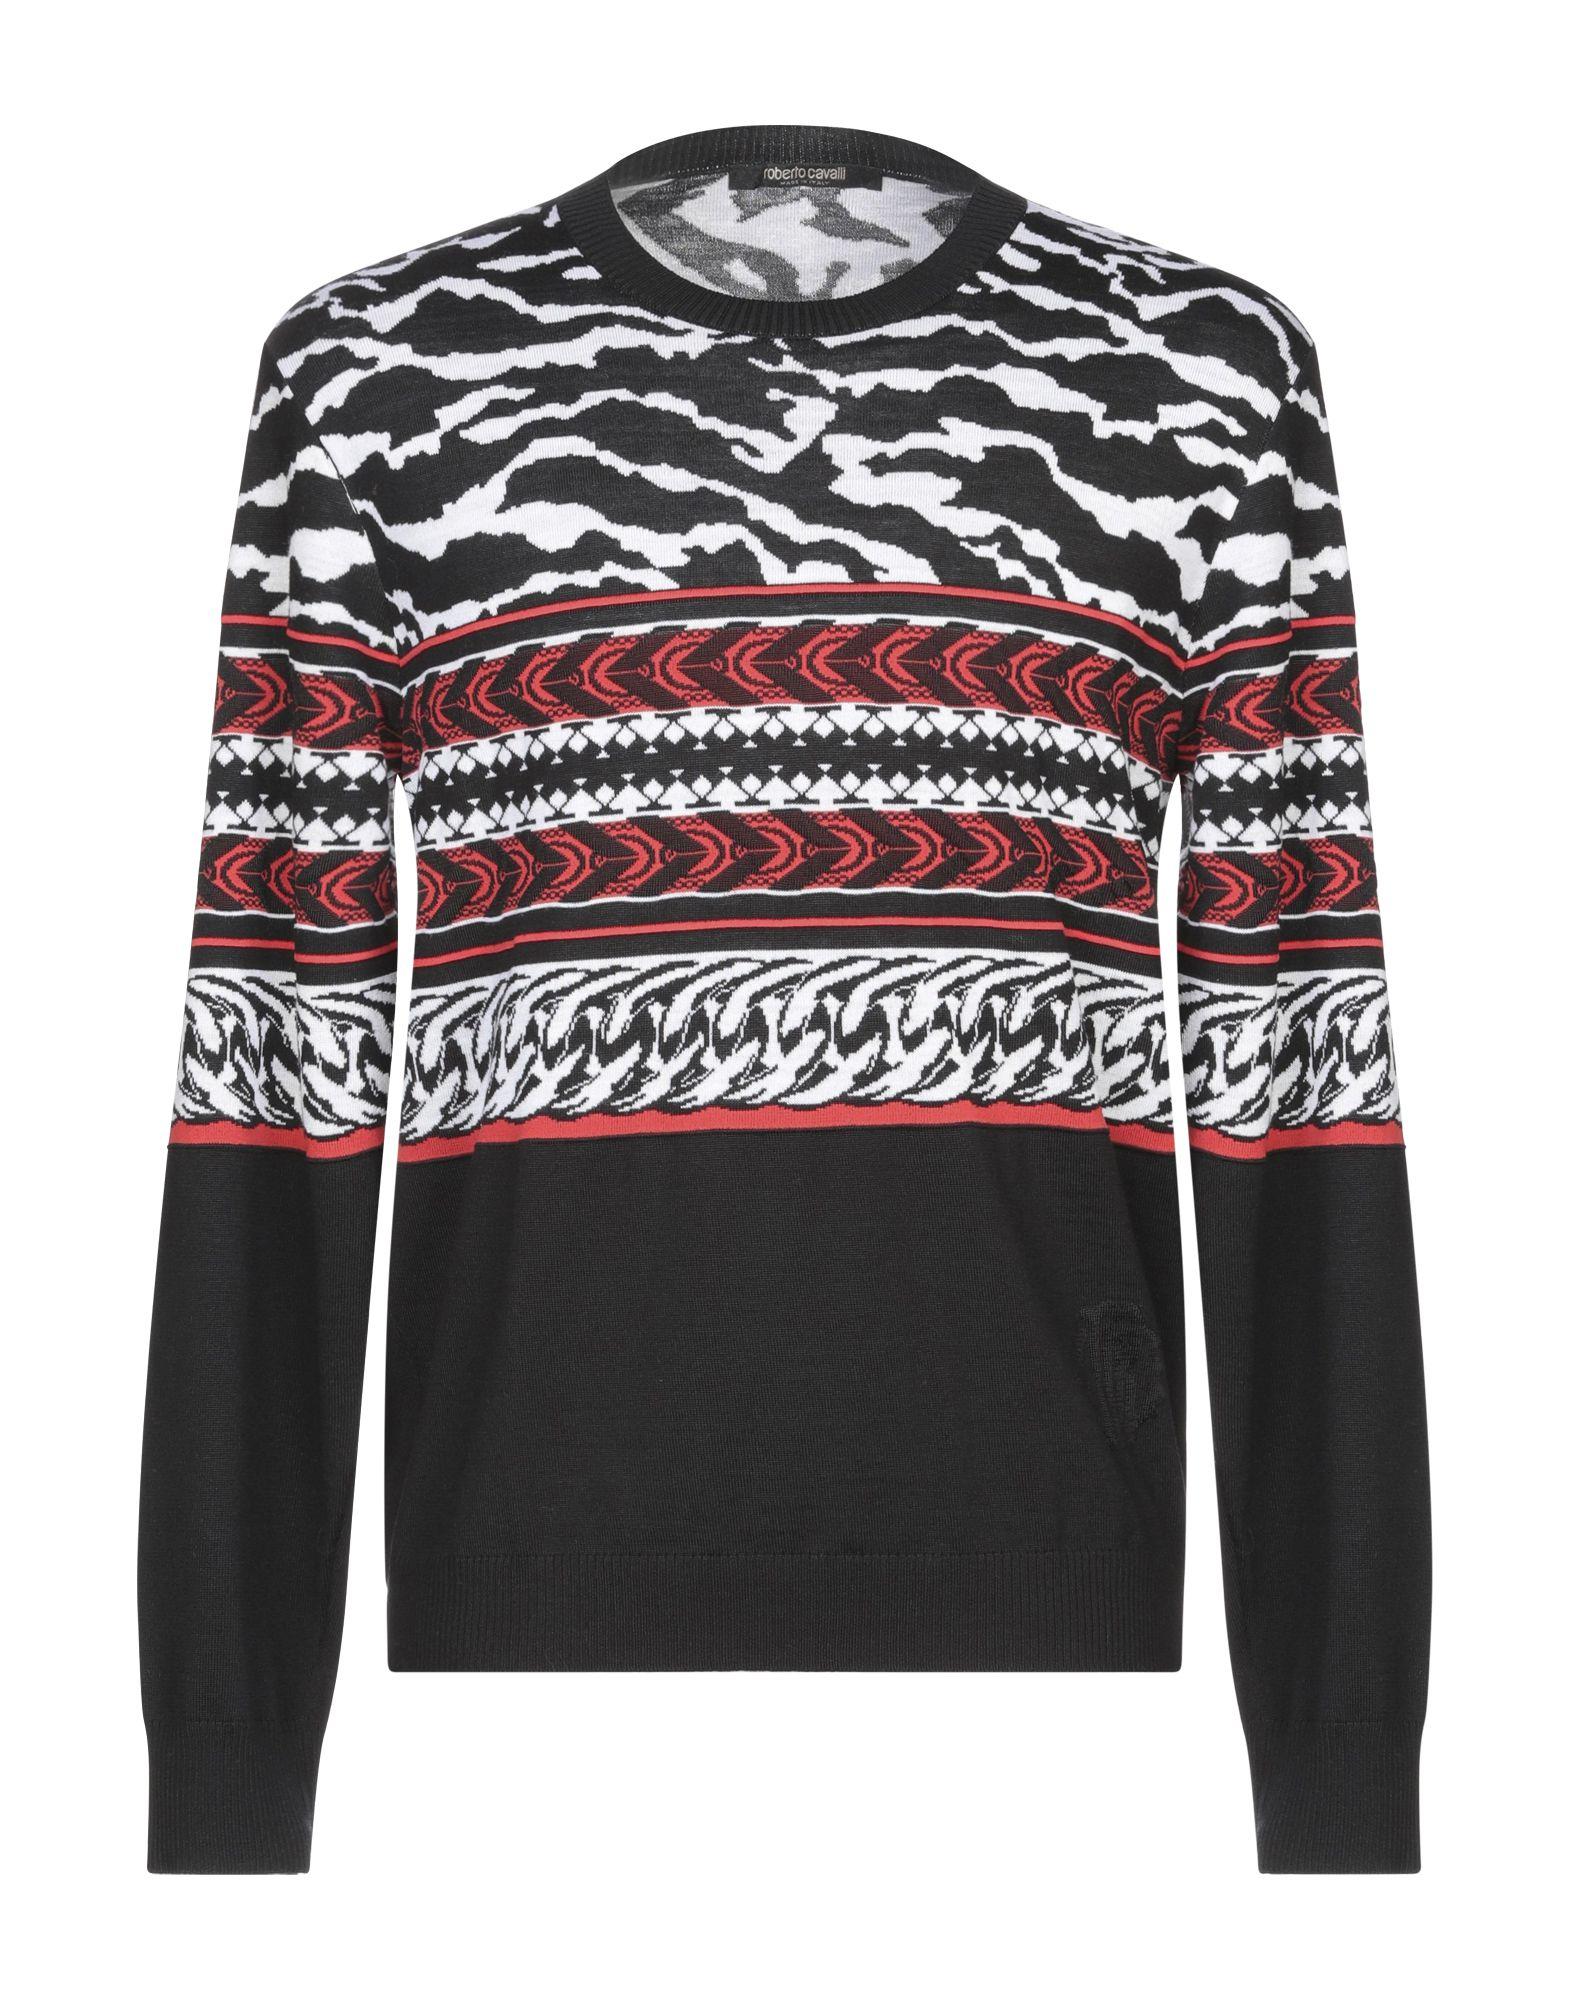 Roberto Cavalli Wool Sweater in Black for Men - Lyst